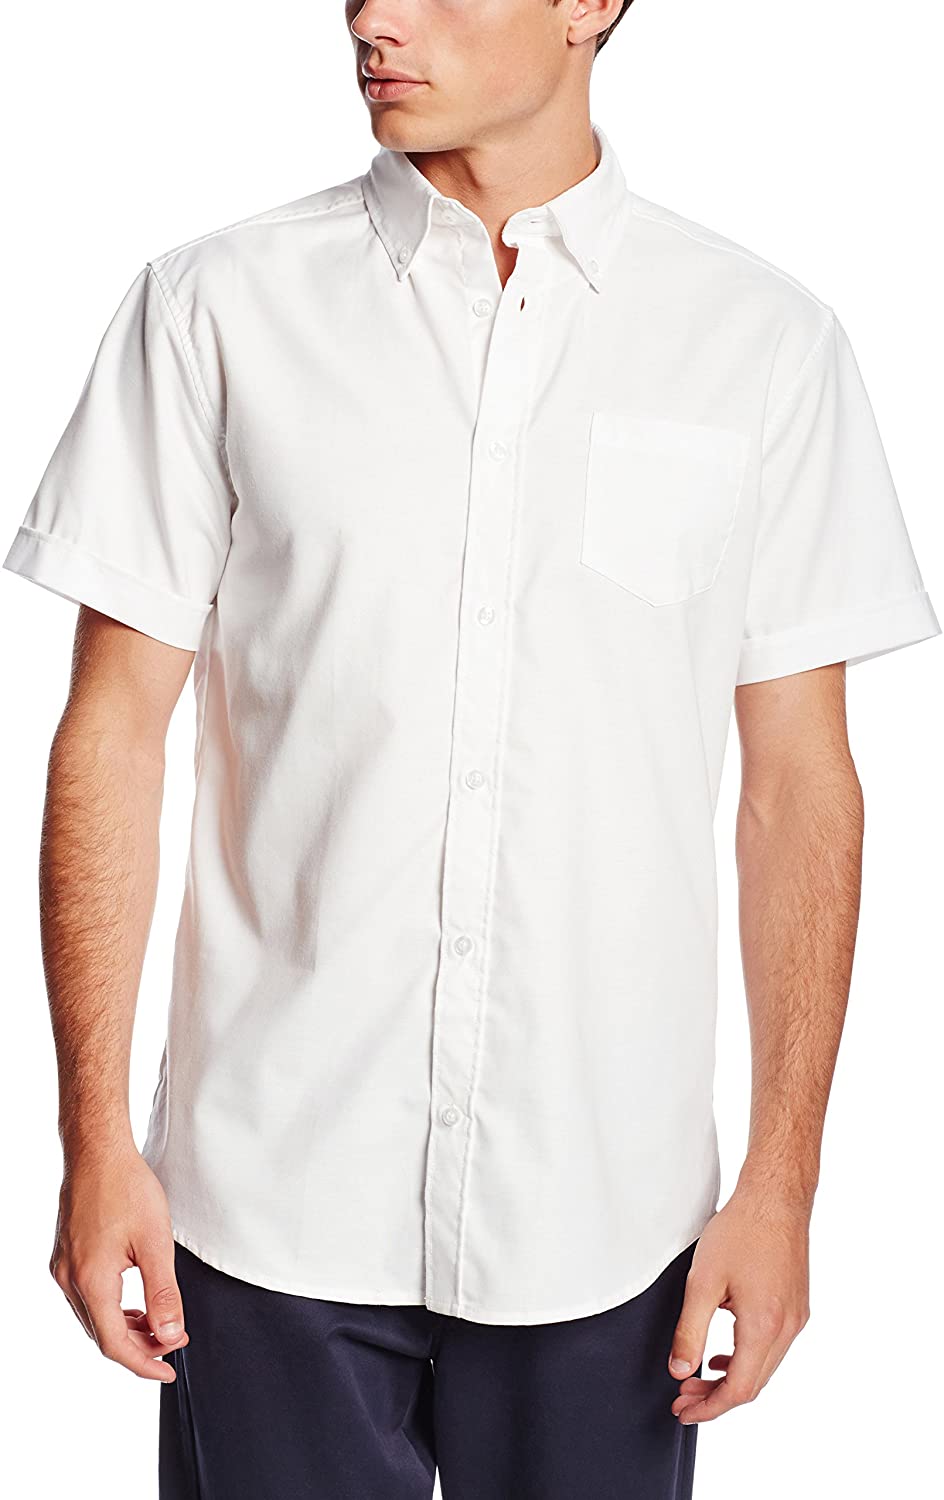 Lee Uniforms Men's Short-Sleeve Oxford Shirt